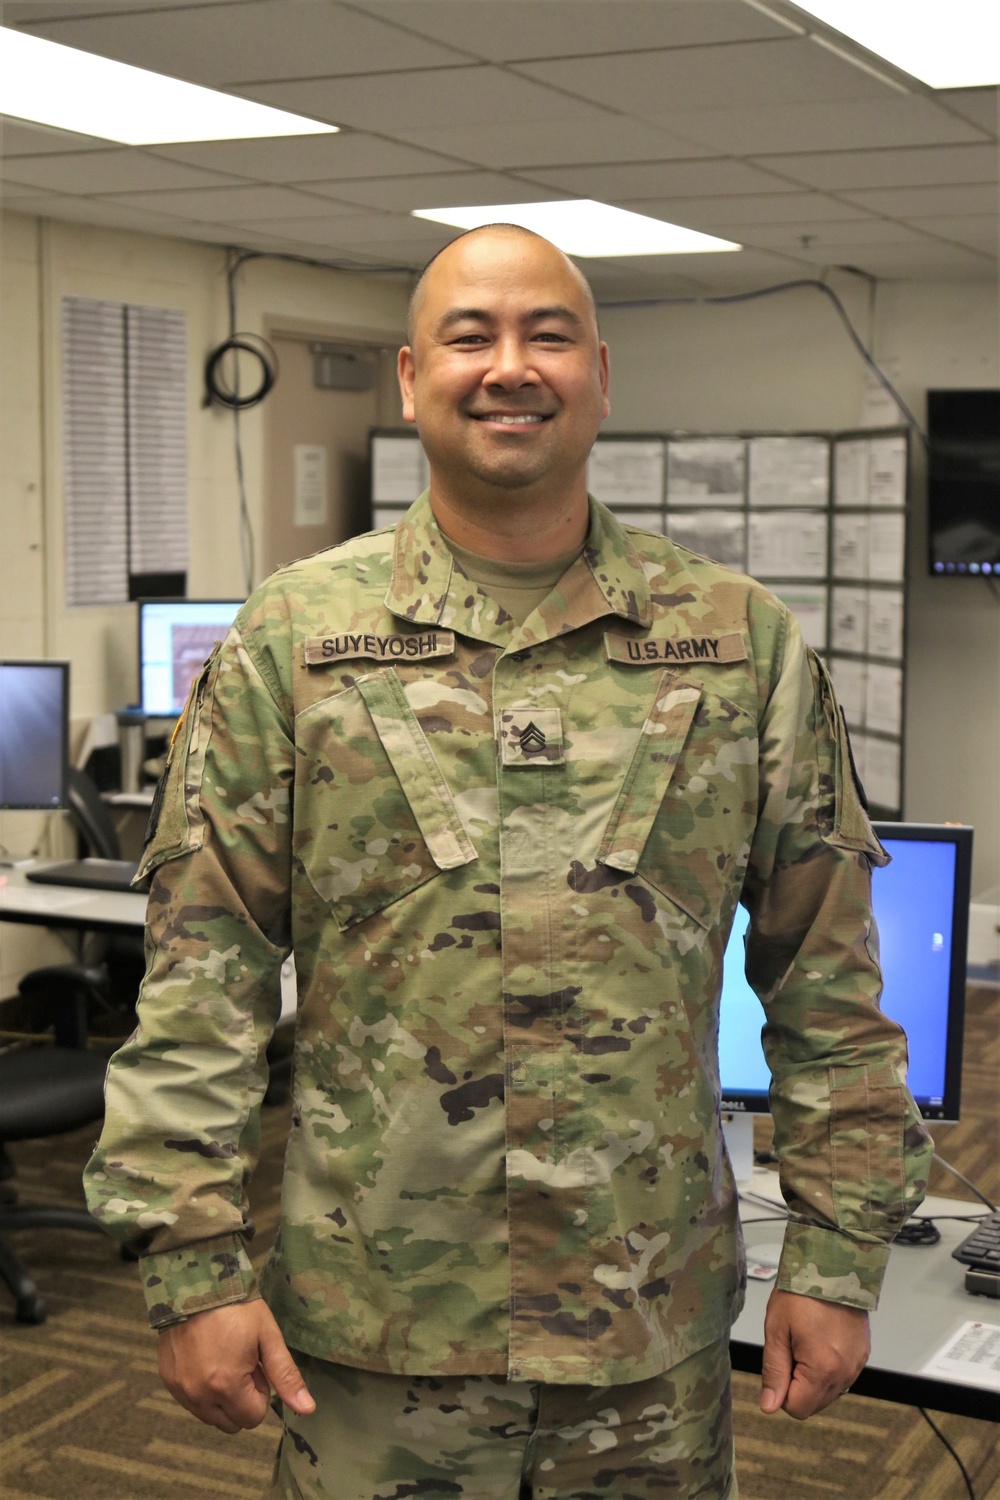 Service Speaks: SSG Lawrence Suyeyoshi, 224th Sustainment Brigade